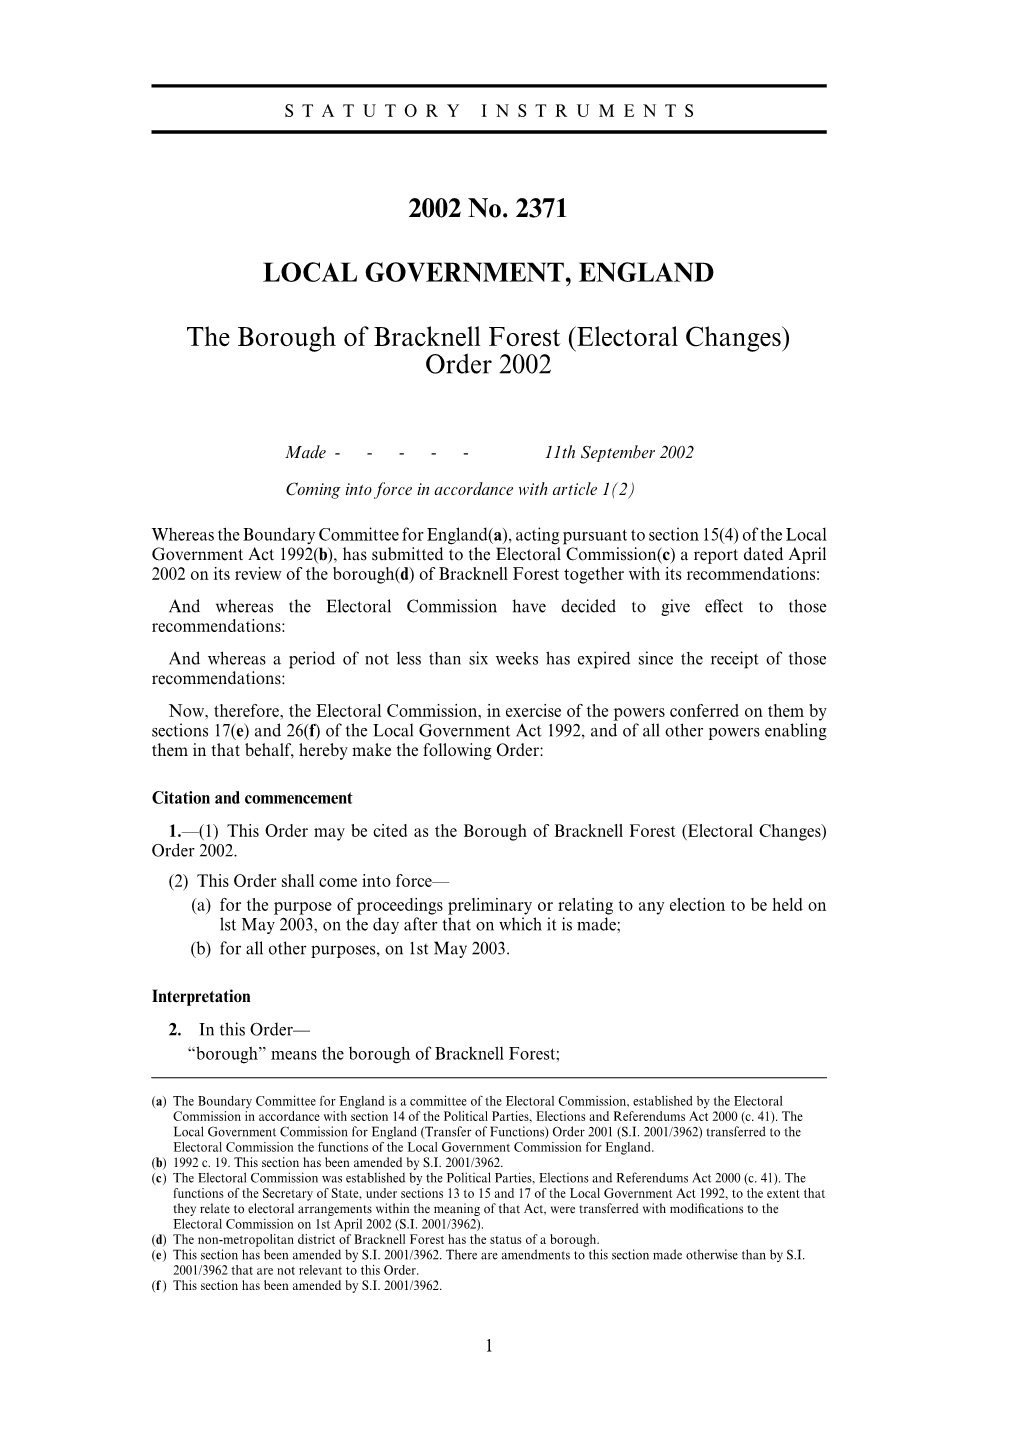 2002 No. 2371 LOCAL GOVERNMENT